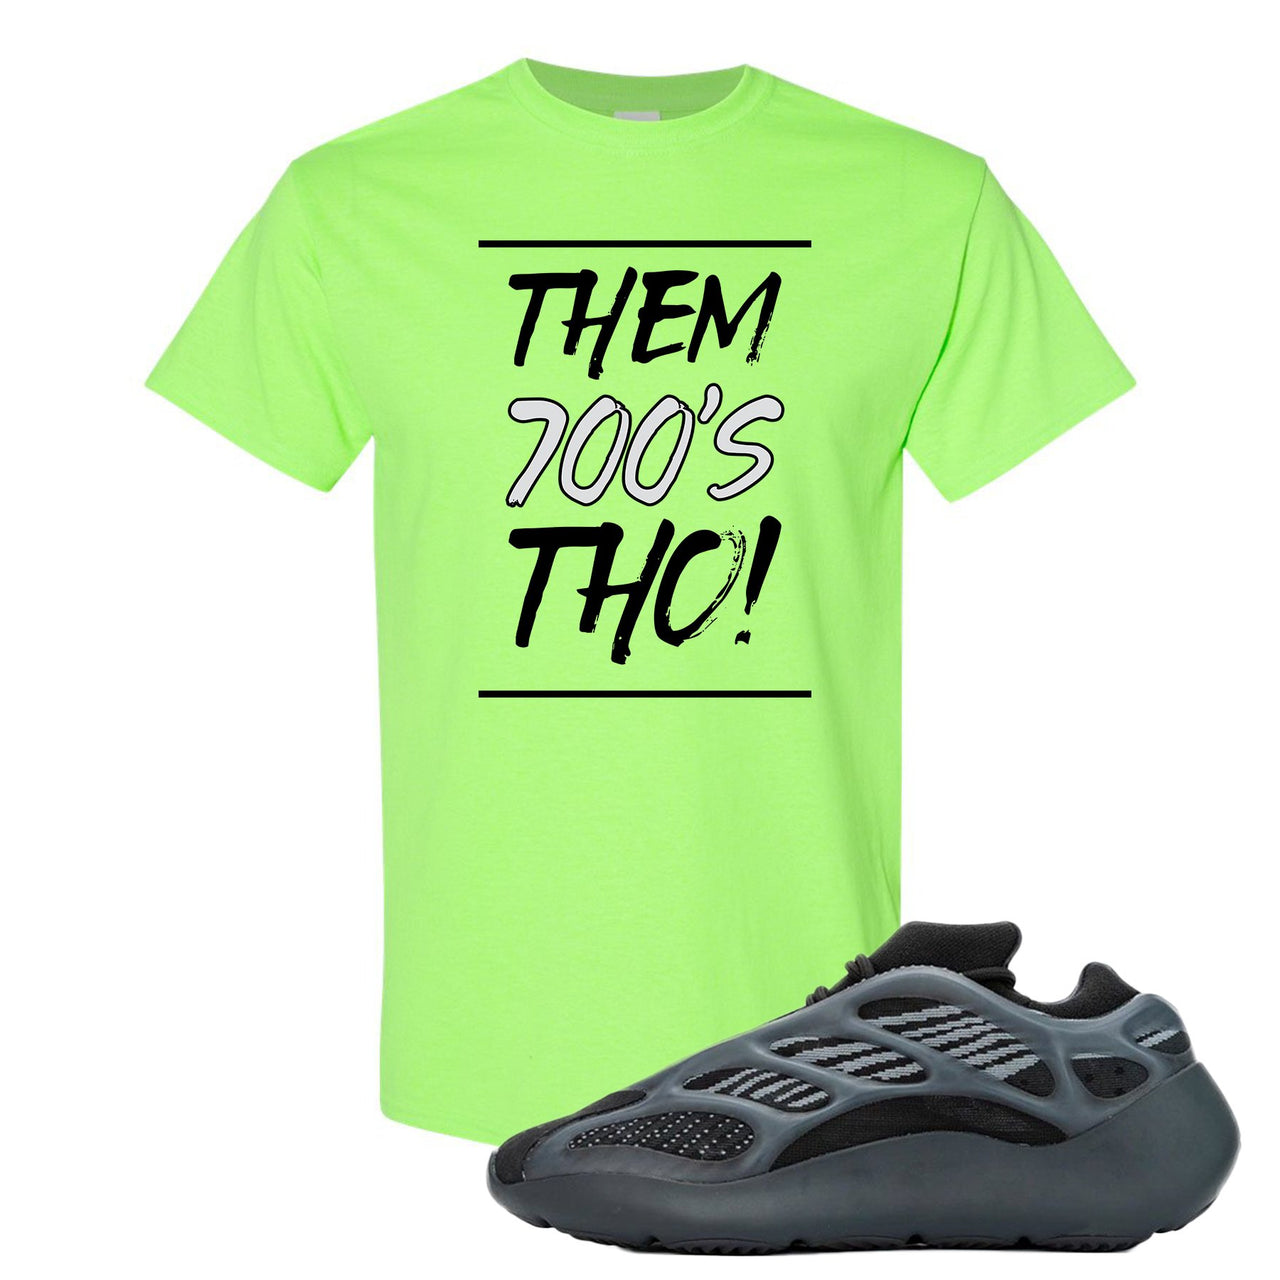 Alvah v3 700s T Shirt | Them 700's Tho!, Neon Green